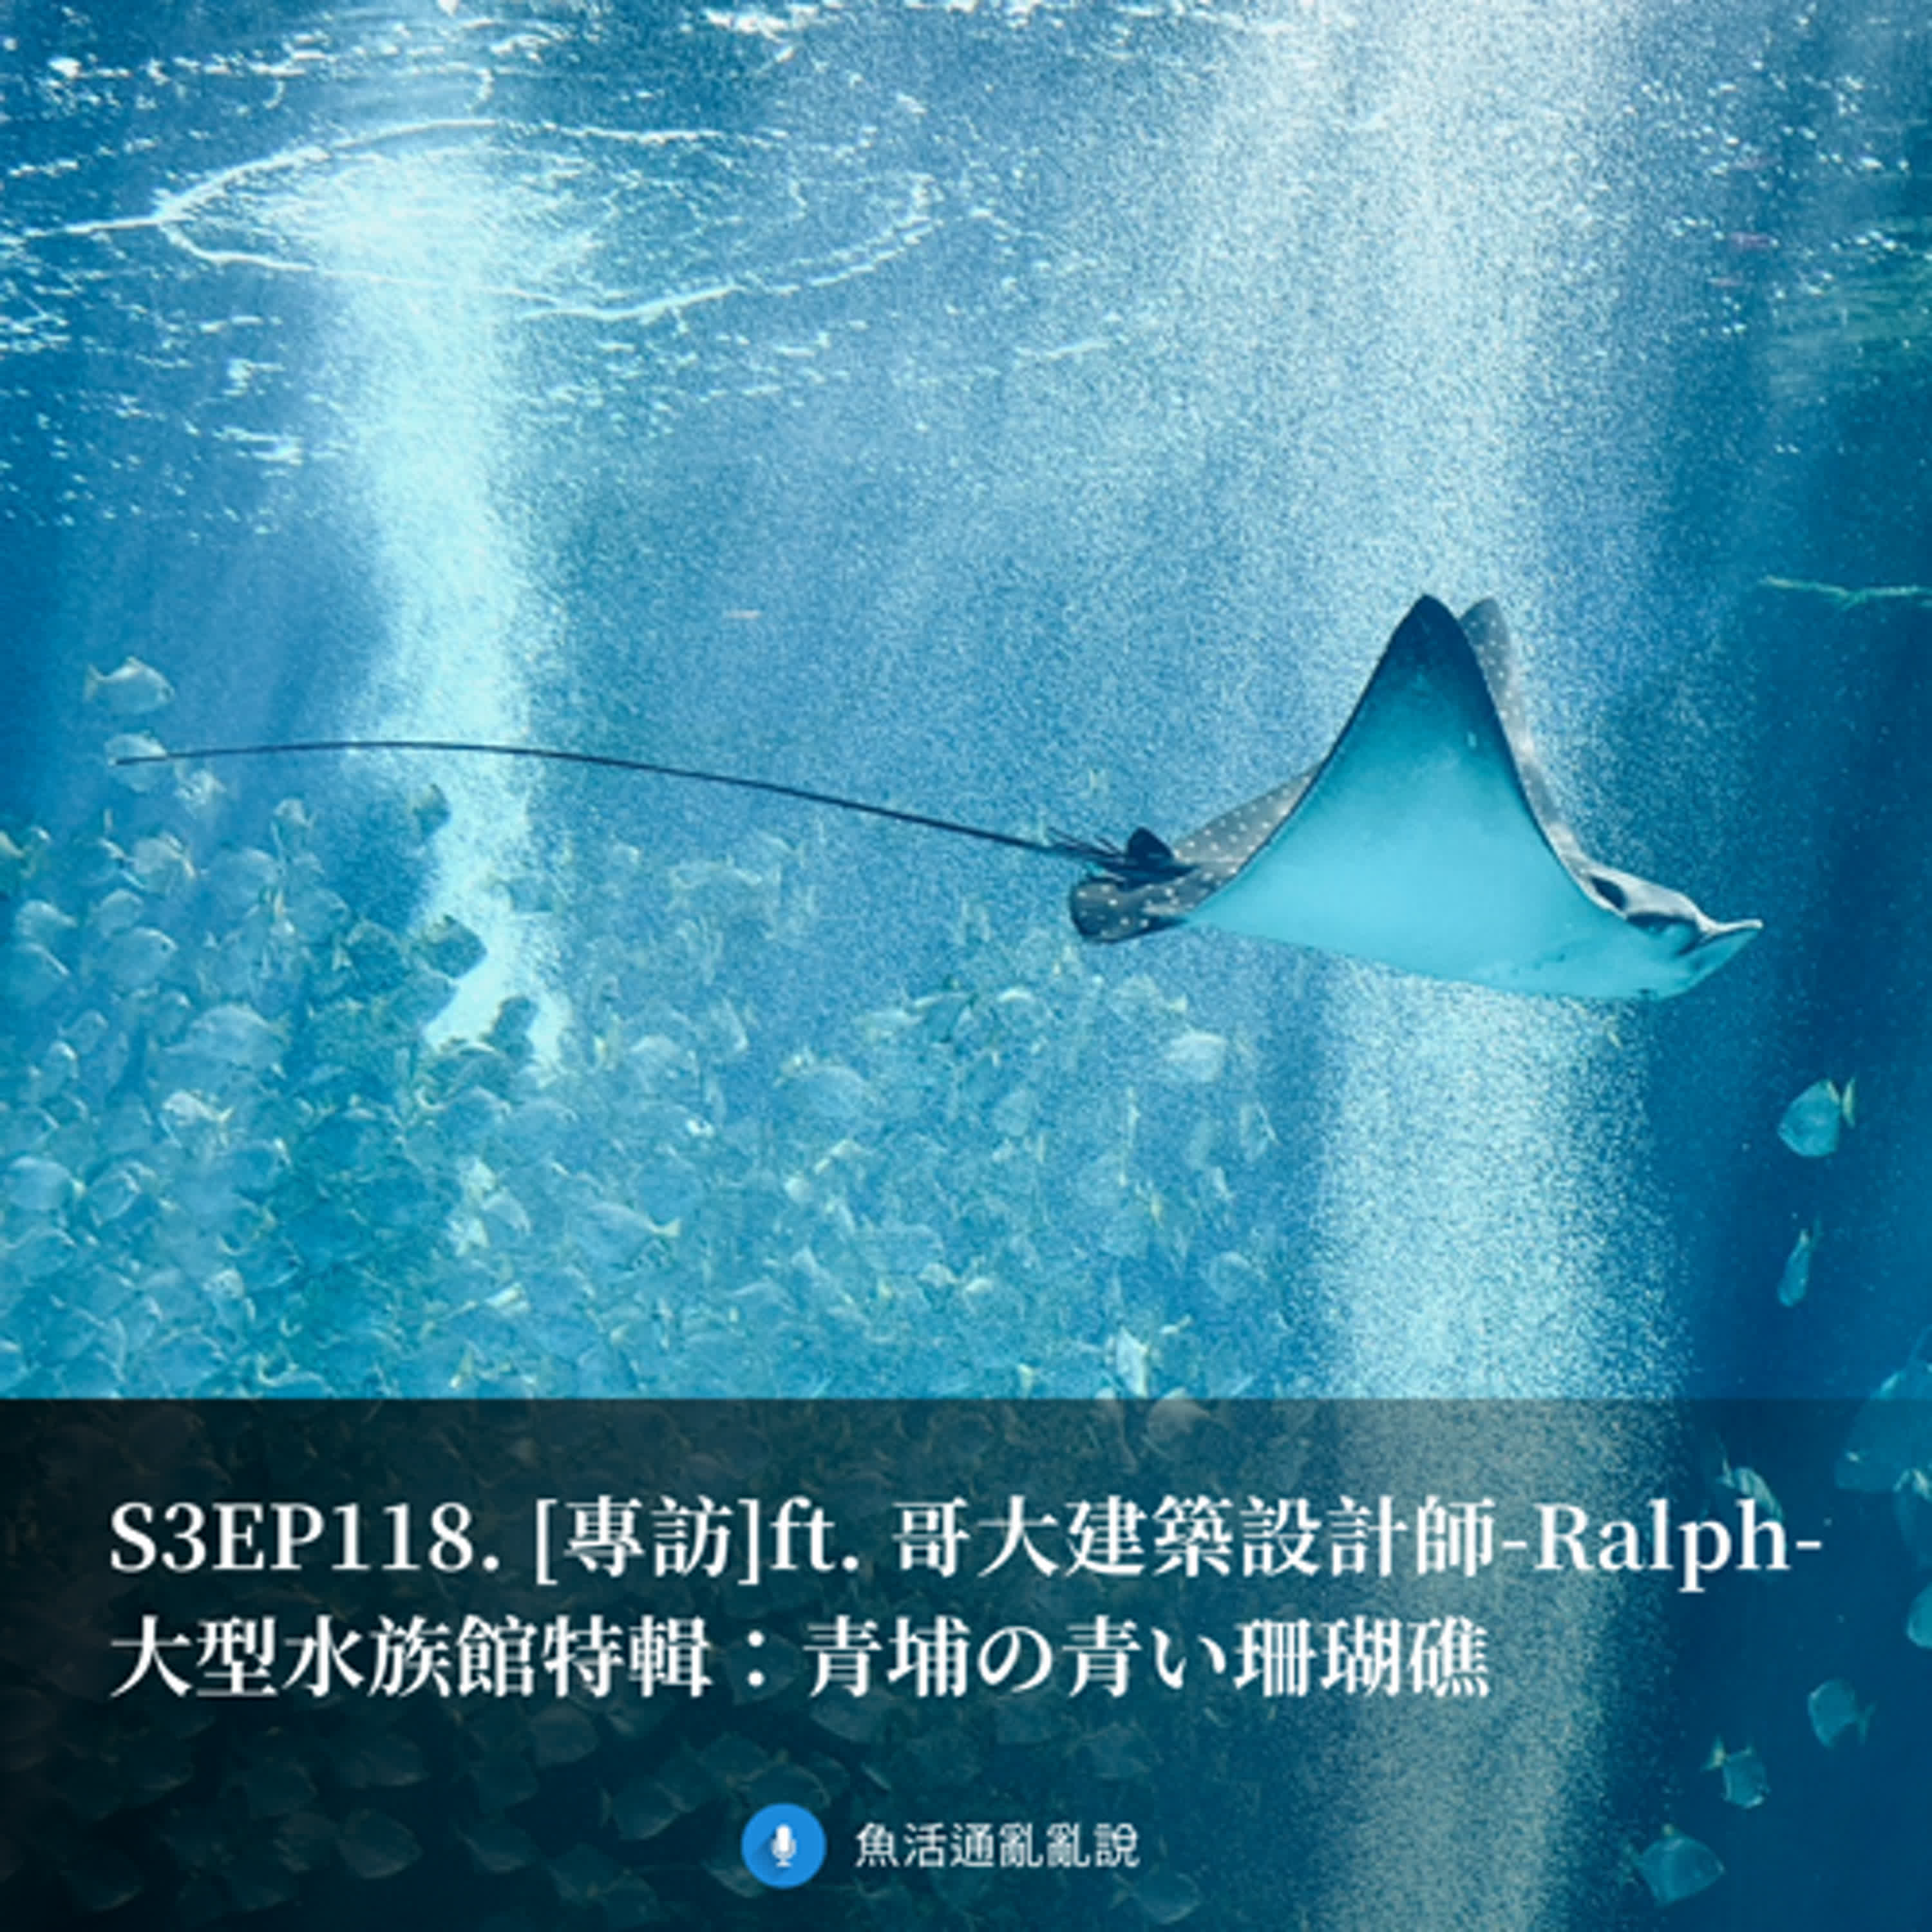 S3EP118. [專訪]ft. 哥大建築設計師-Ralph- 大型水族館特輯：青埔の青い珊瑚礁